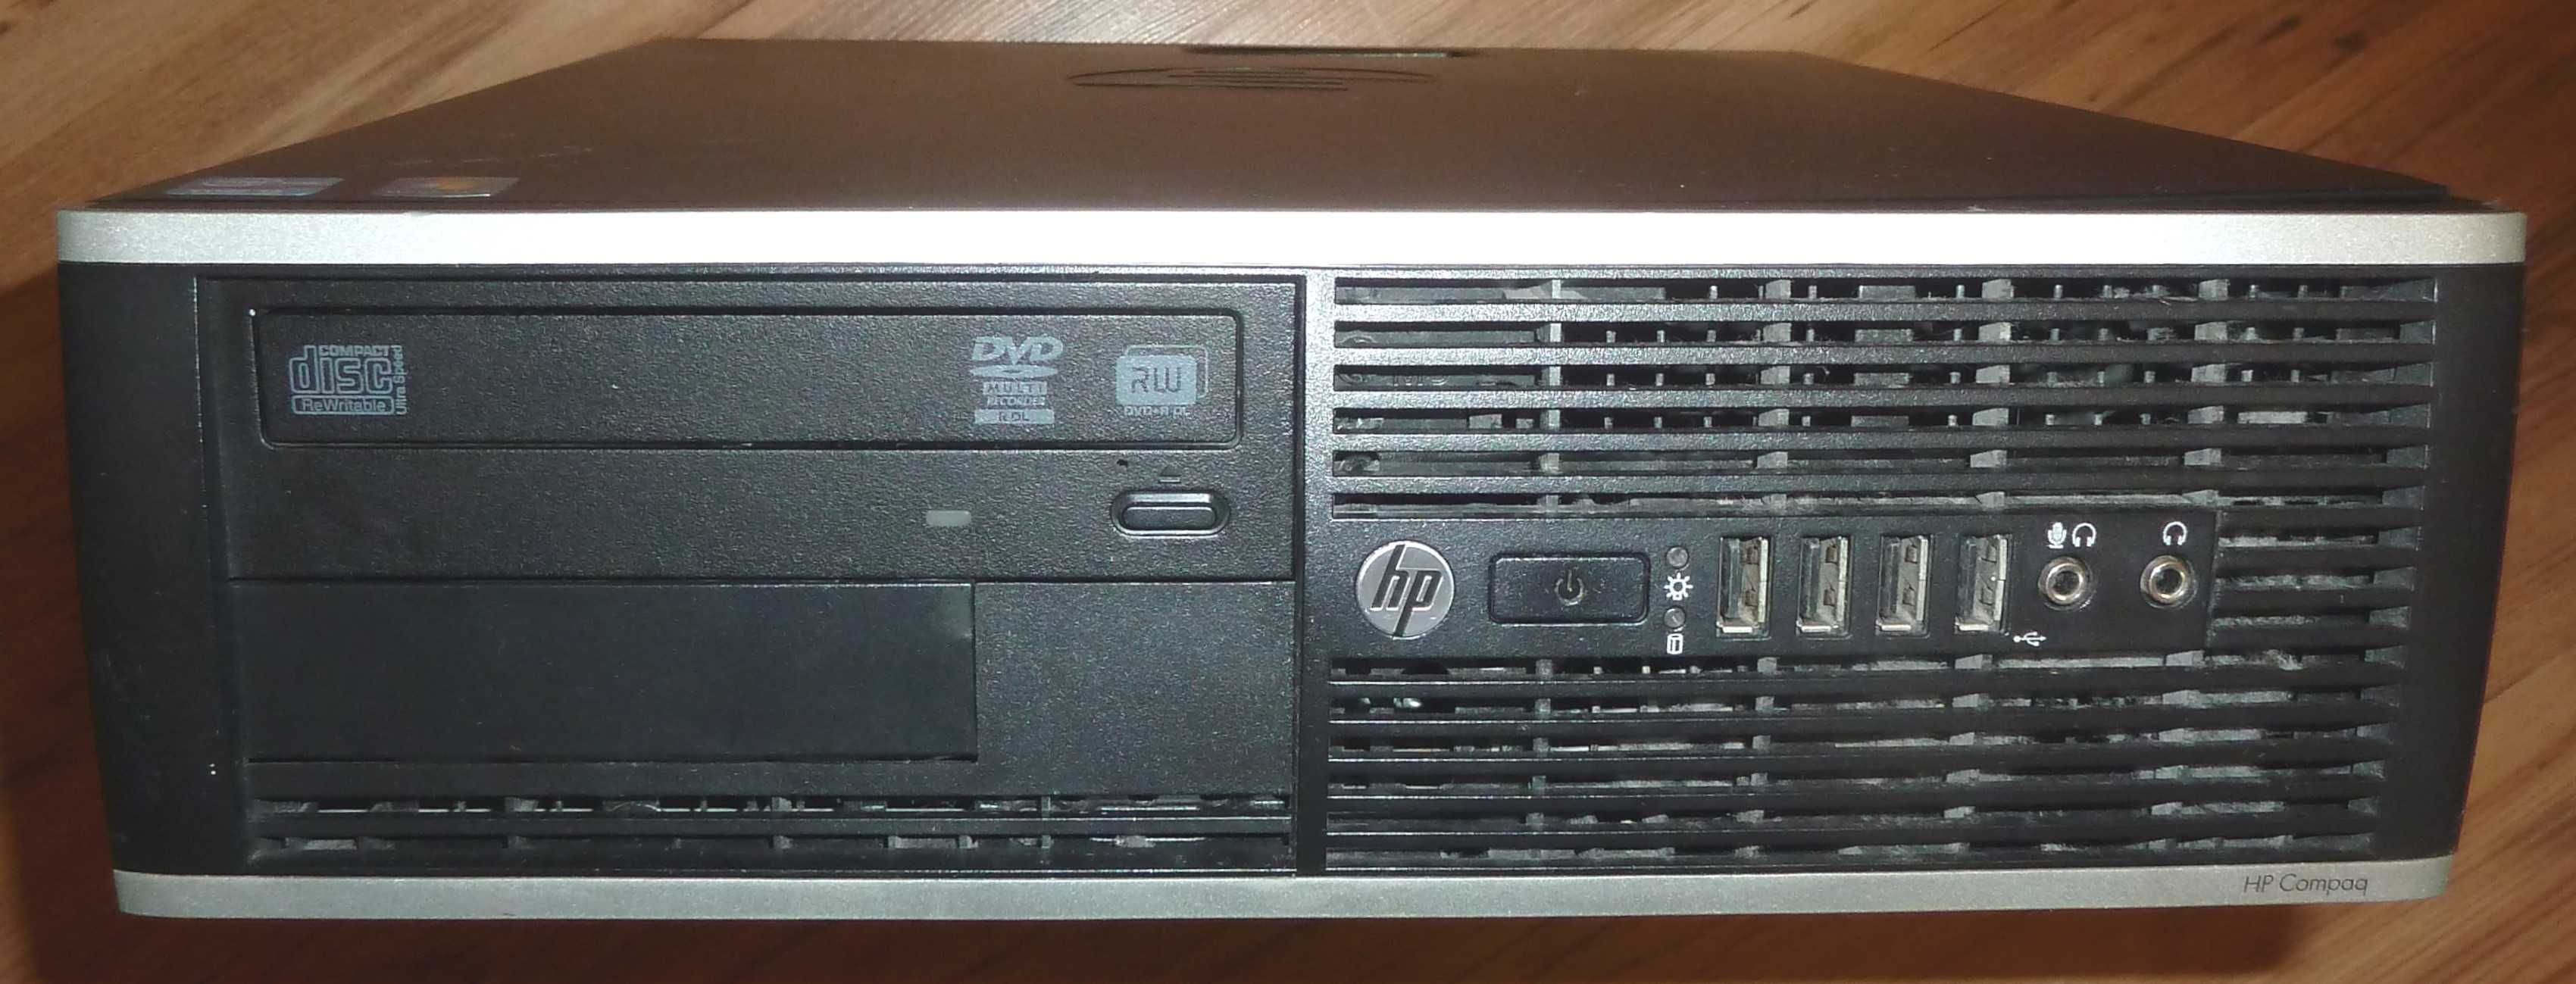 HP 6300 SFF Intel i5-3570 - SSD 32GB - HDD 1TB RAM 4GB USB 3.0 Wrocław